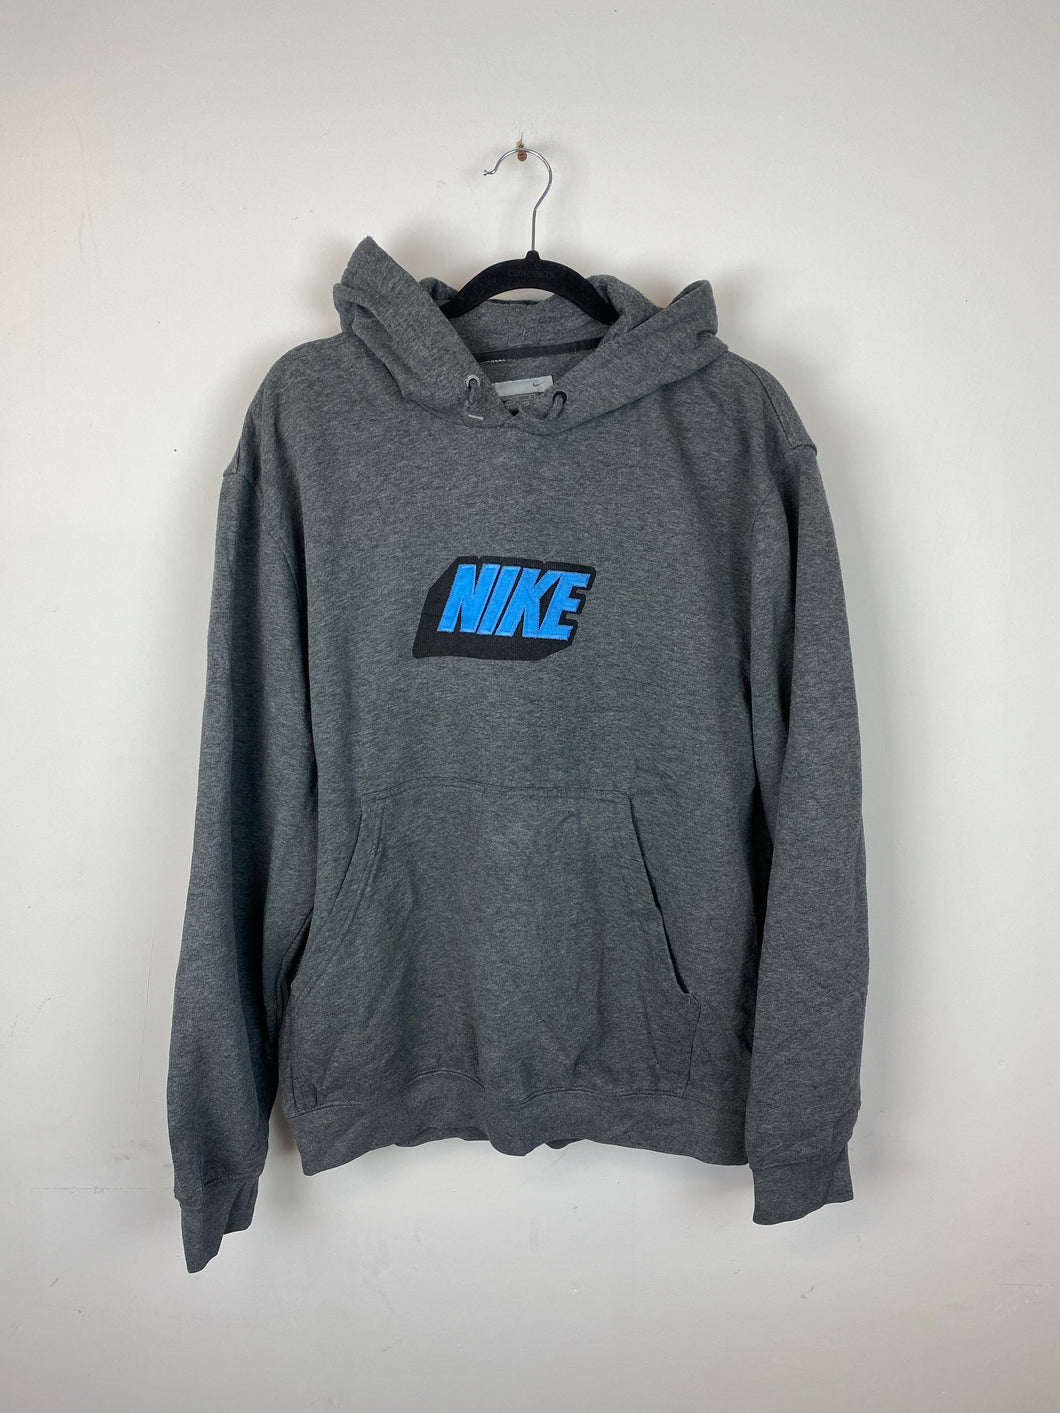 Embroidered Nike hoodie